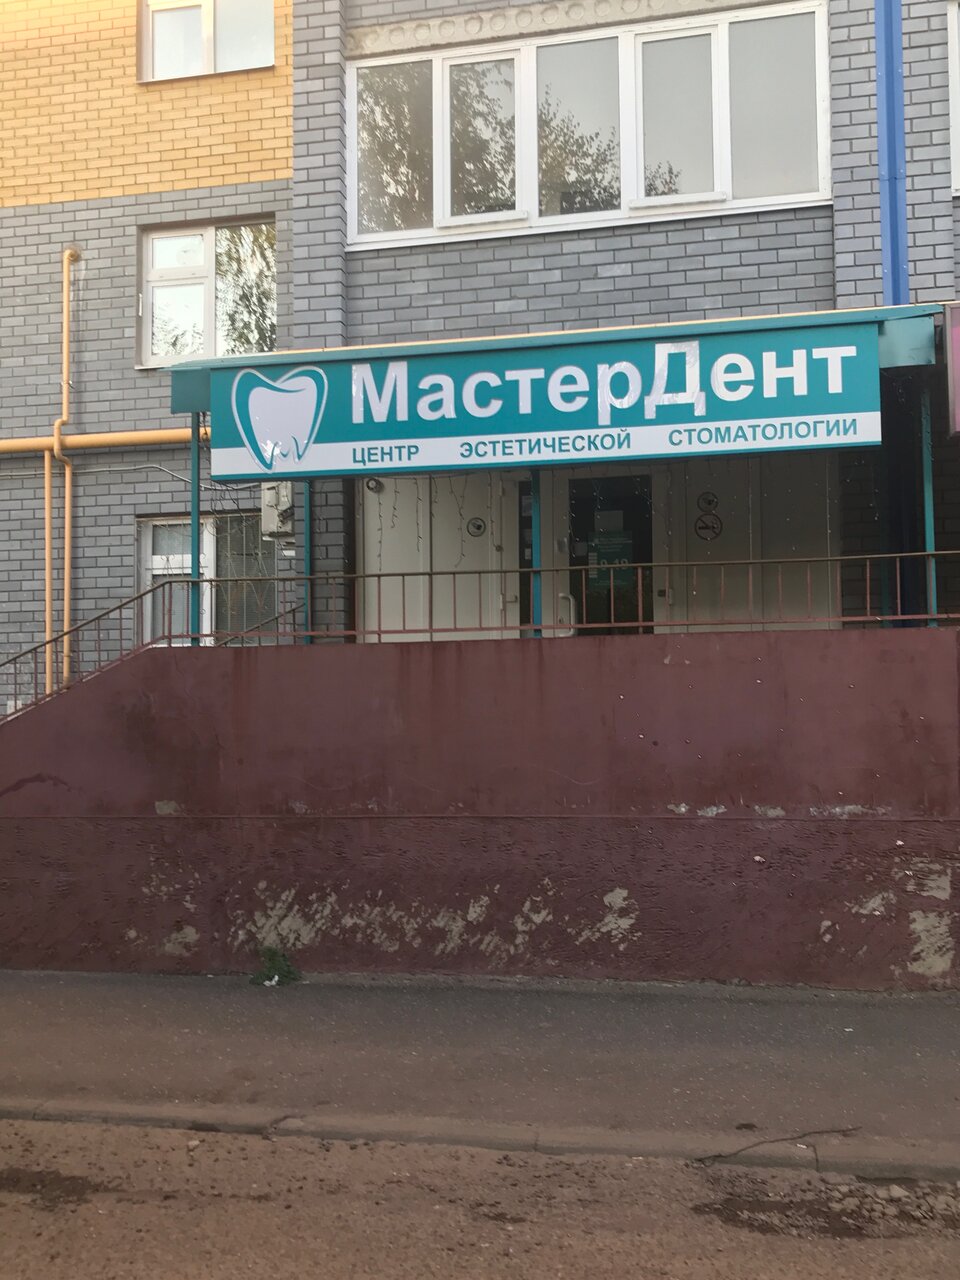 МастерДент - Найдите проверенную стоматологию Yull.ru